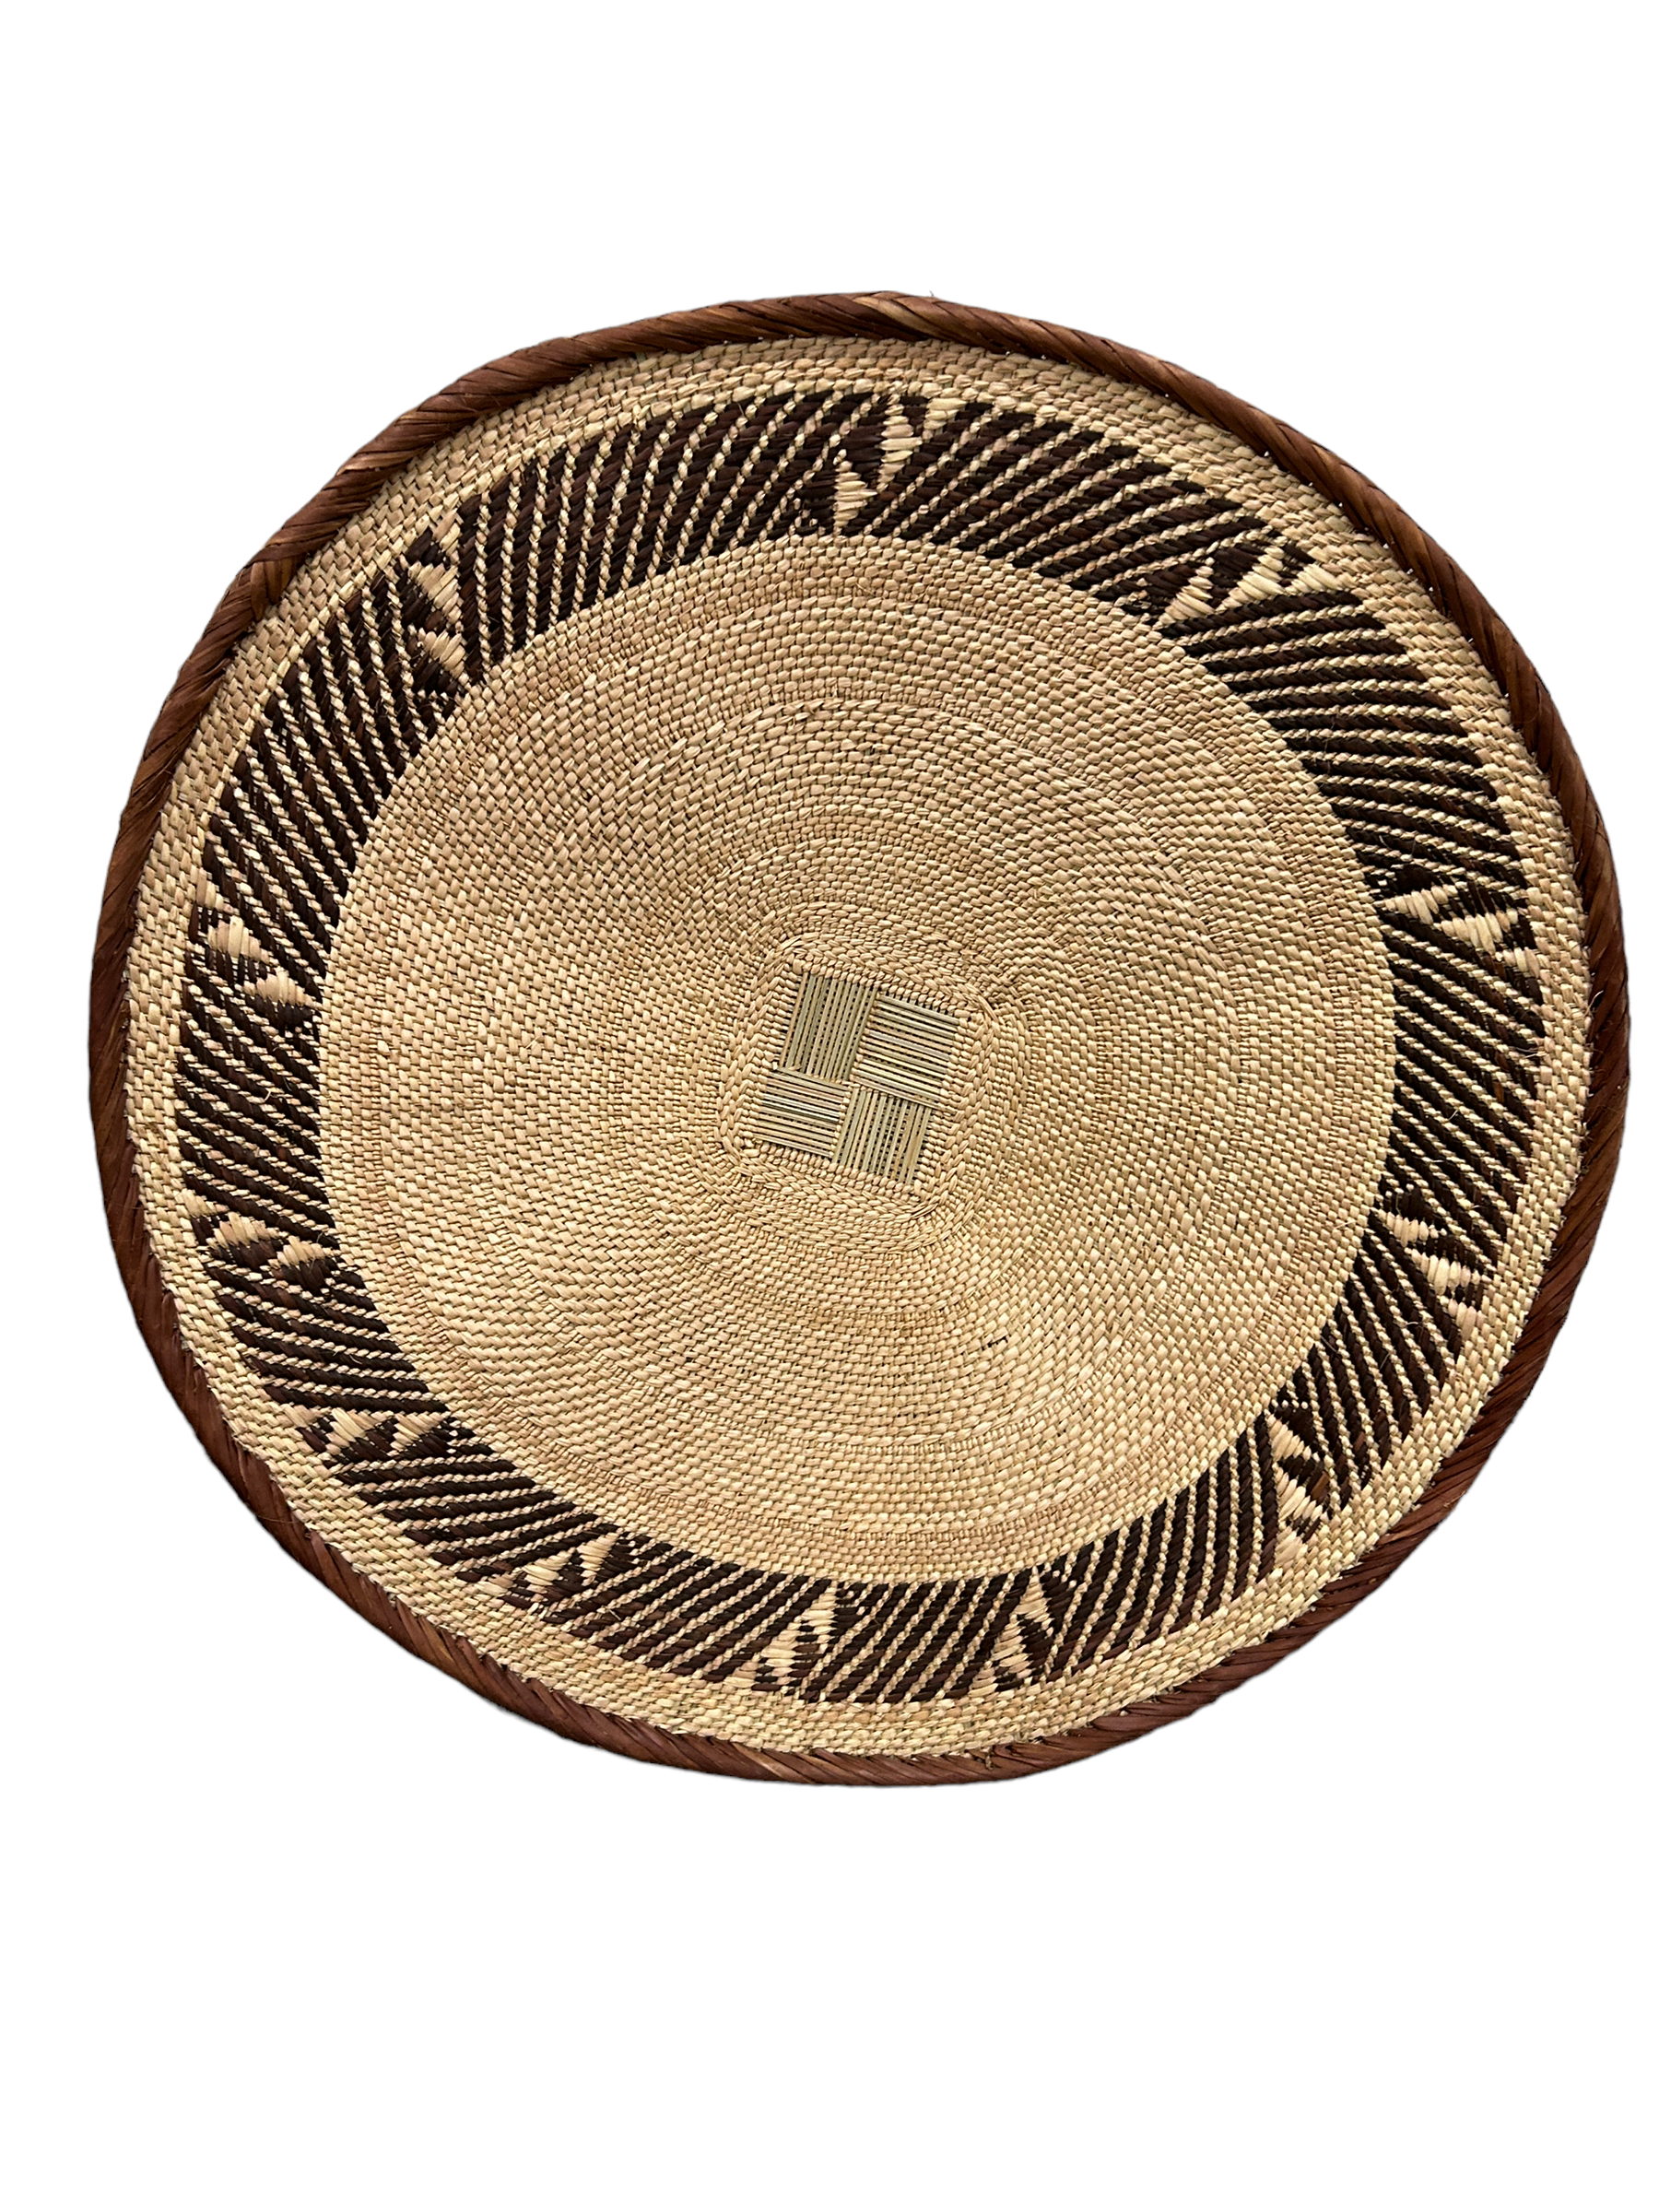 botanicalboysuk Tonga Basket Natural (70-12)